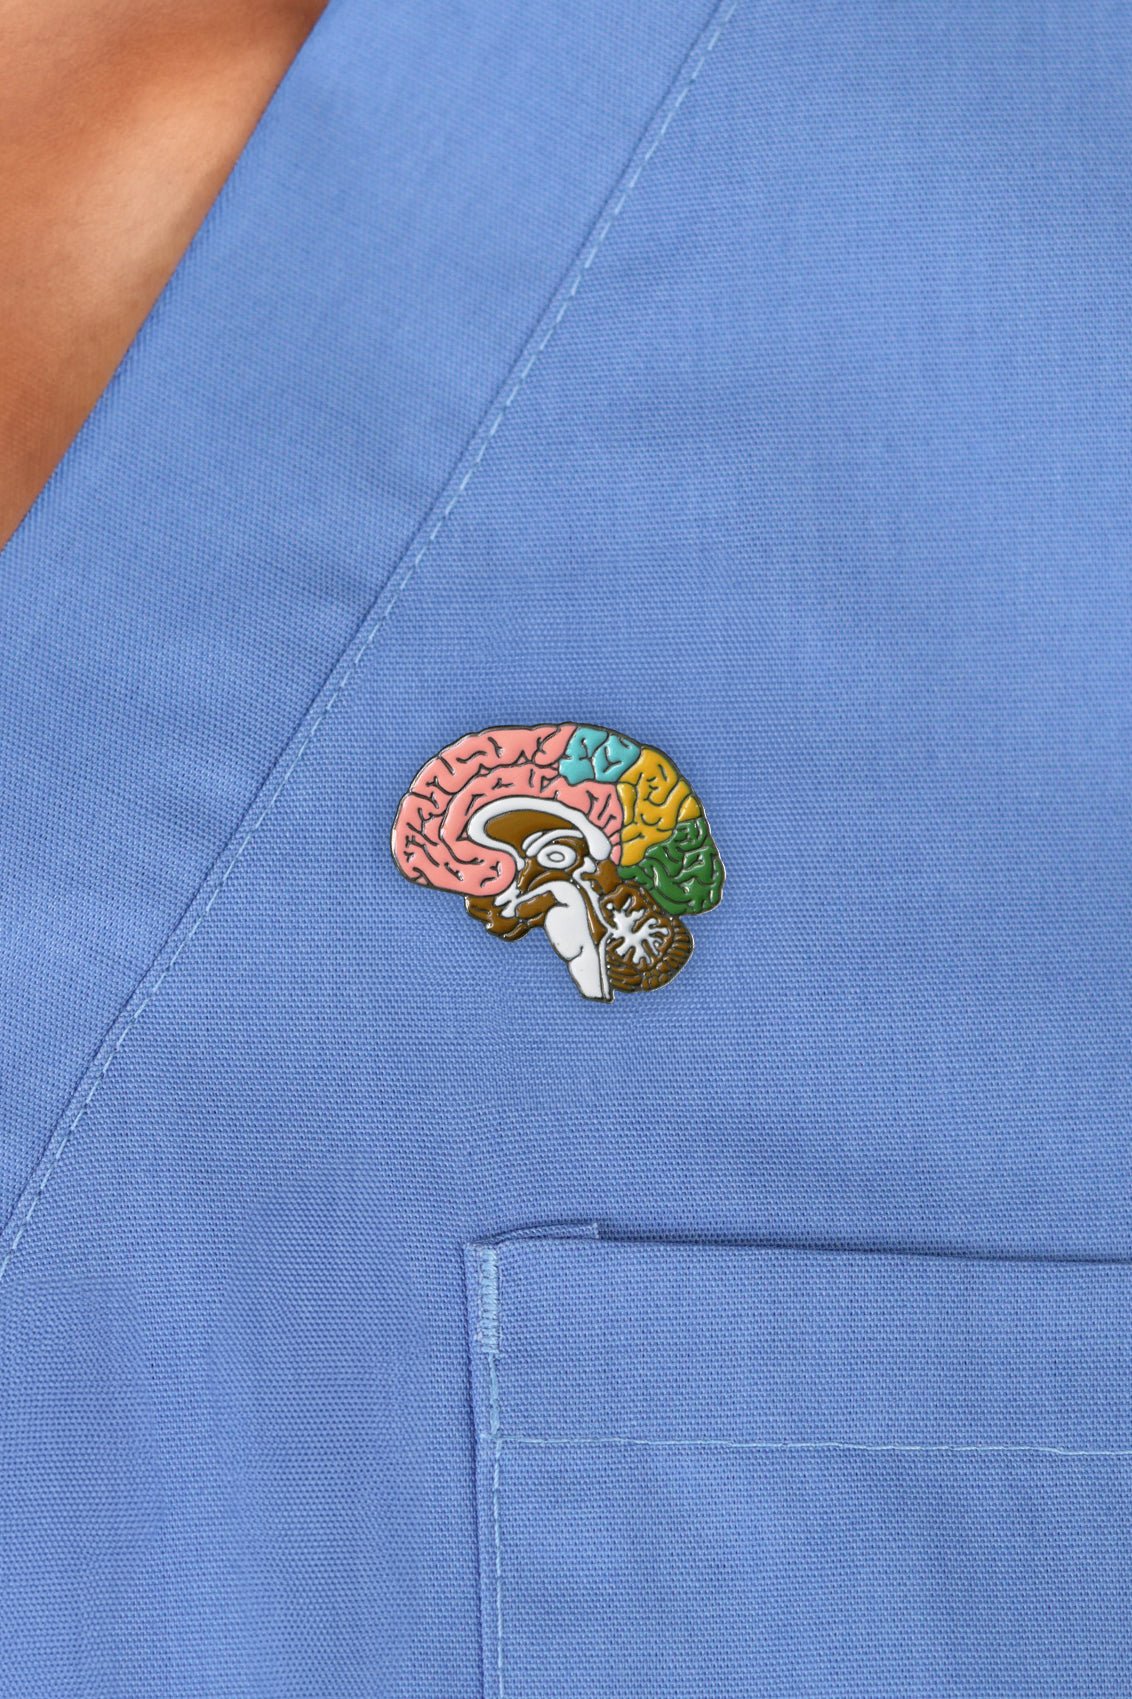 Colorful Brain Pin